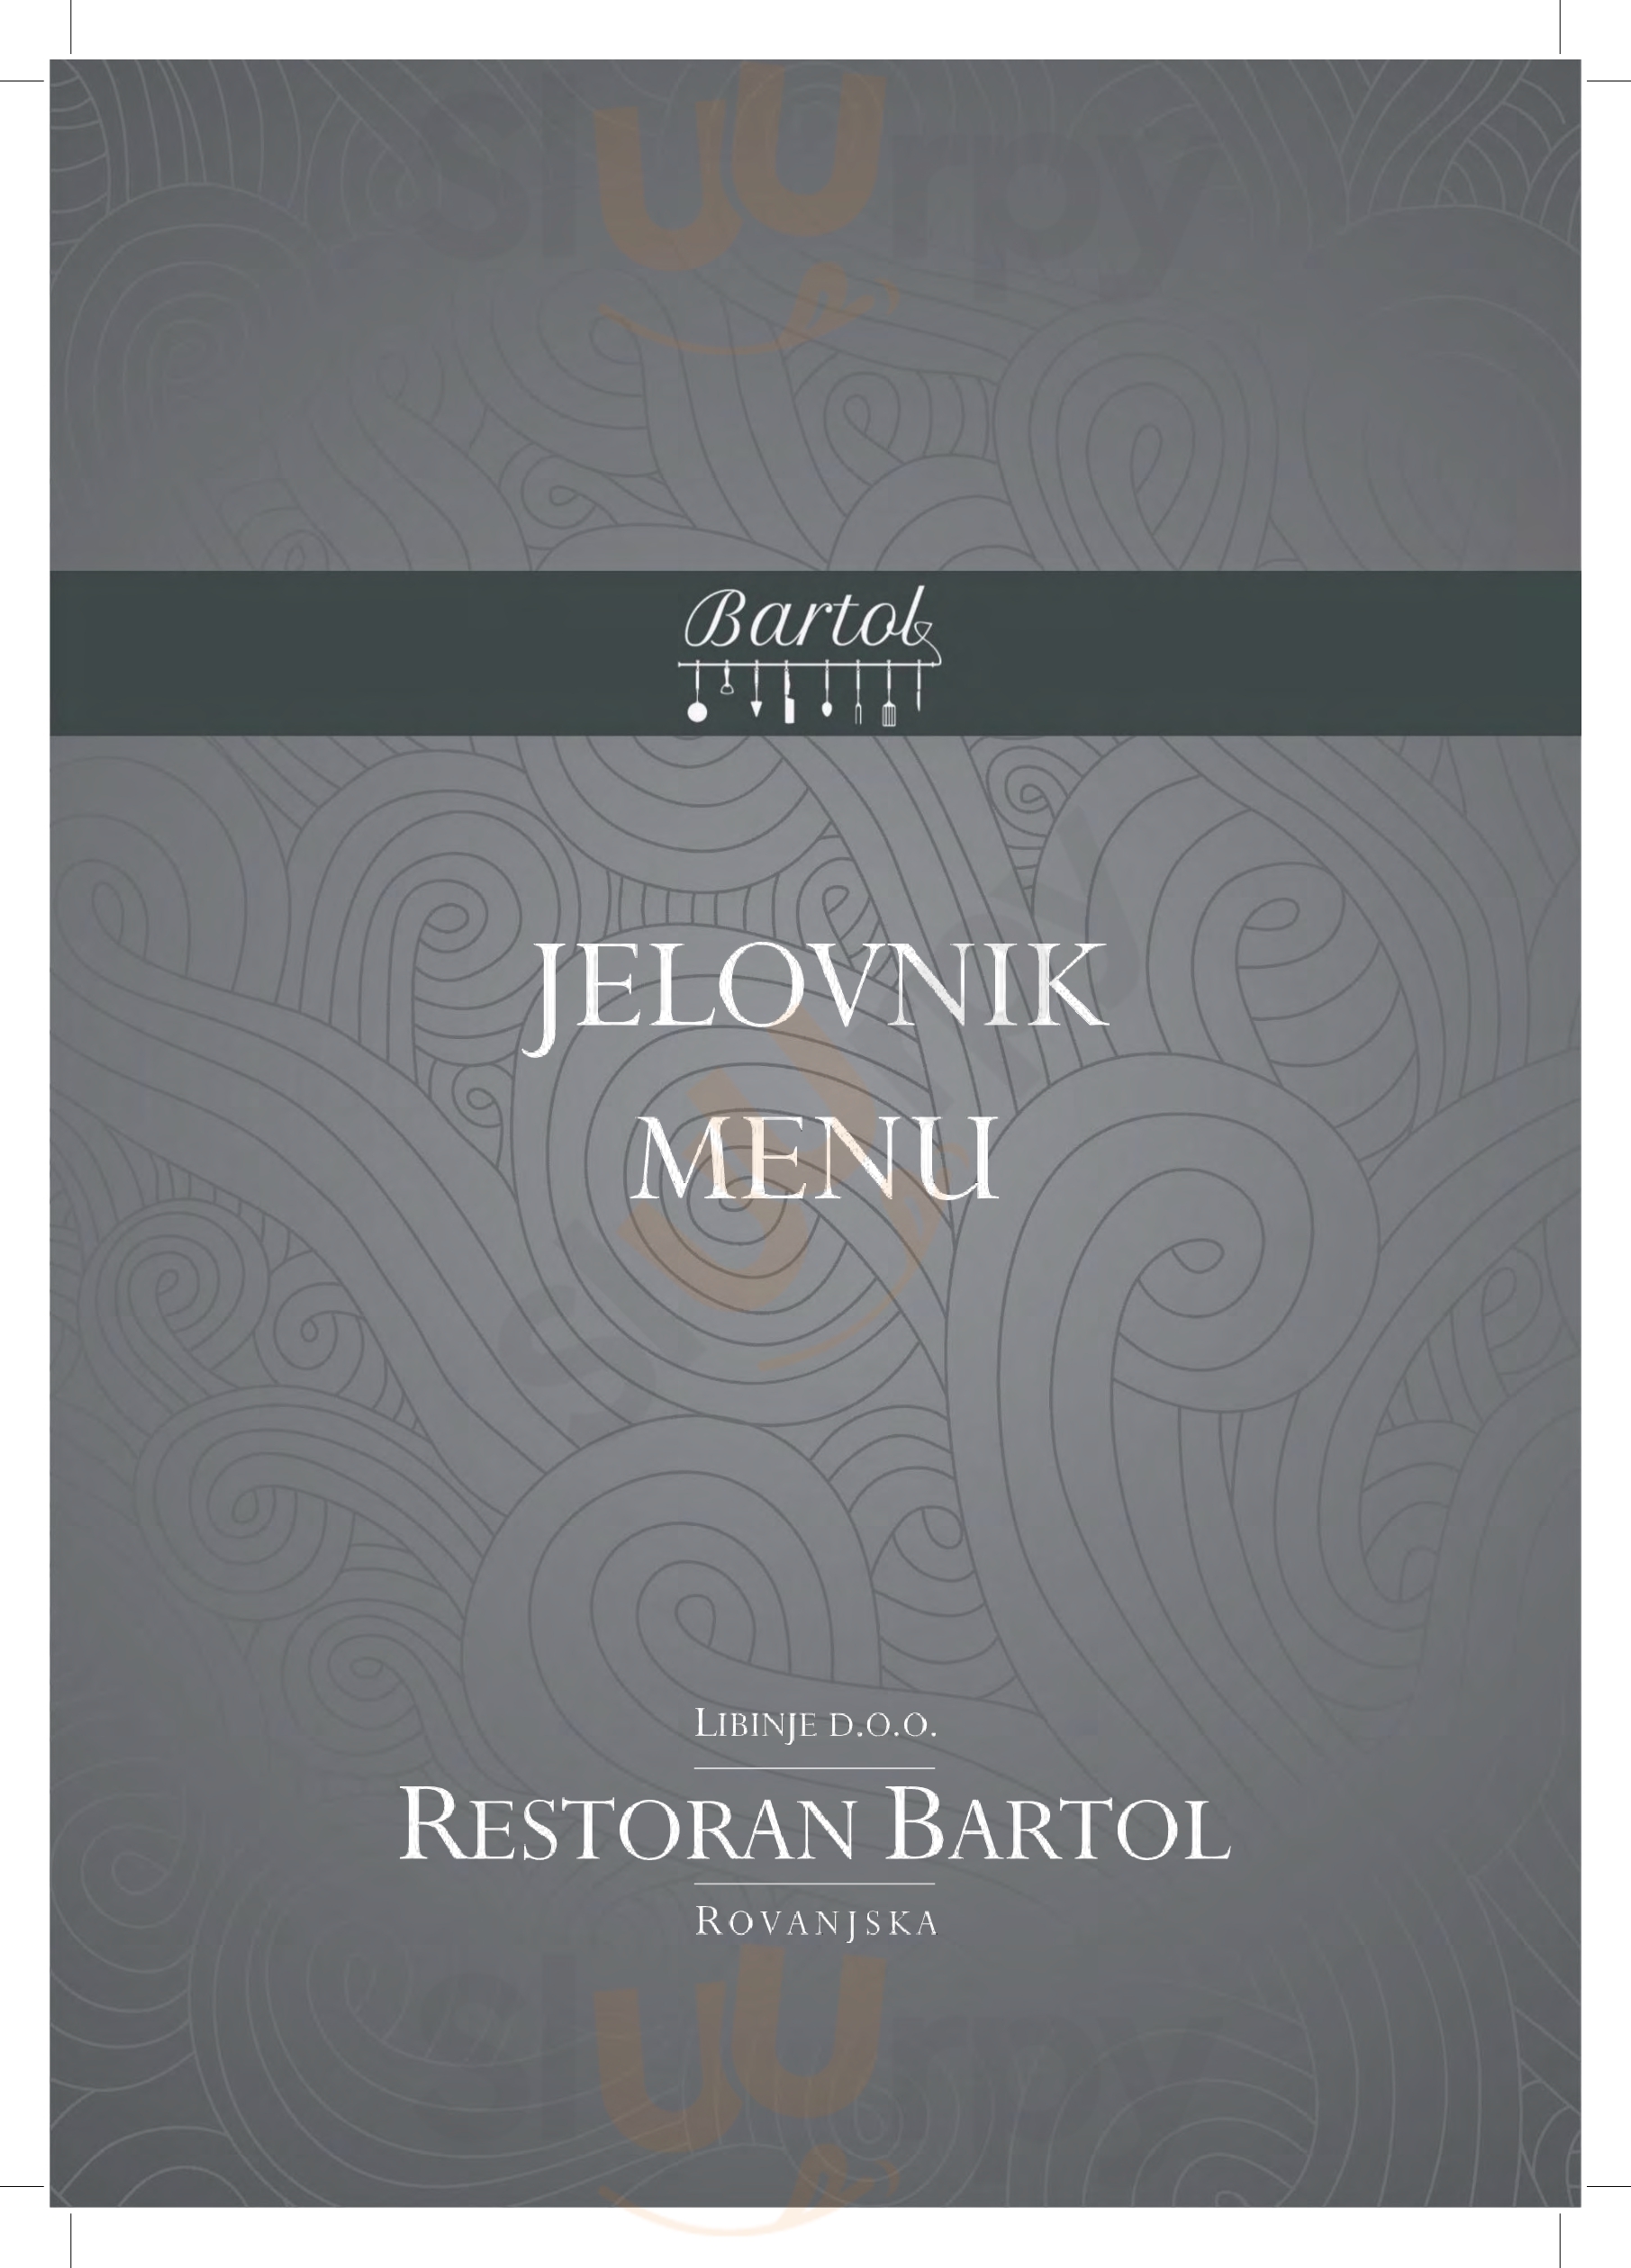 Restoran Bartol Jasenice Menu - 1